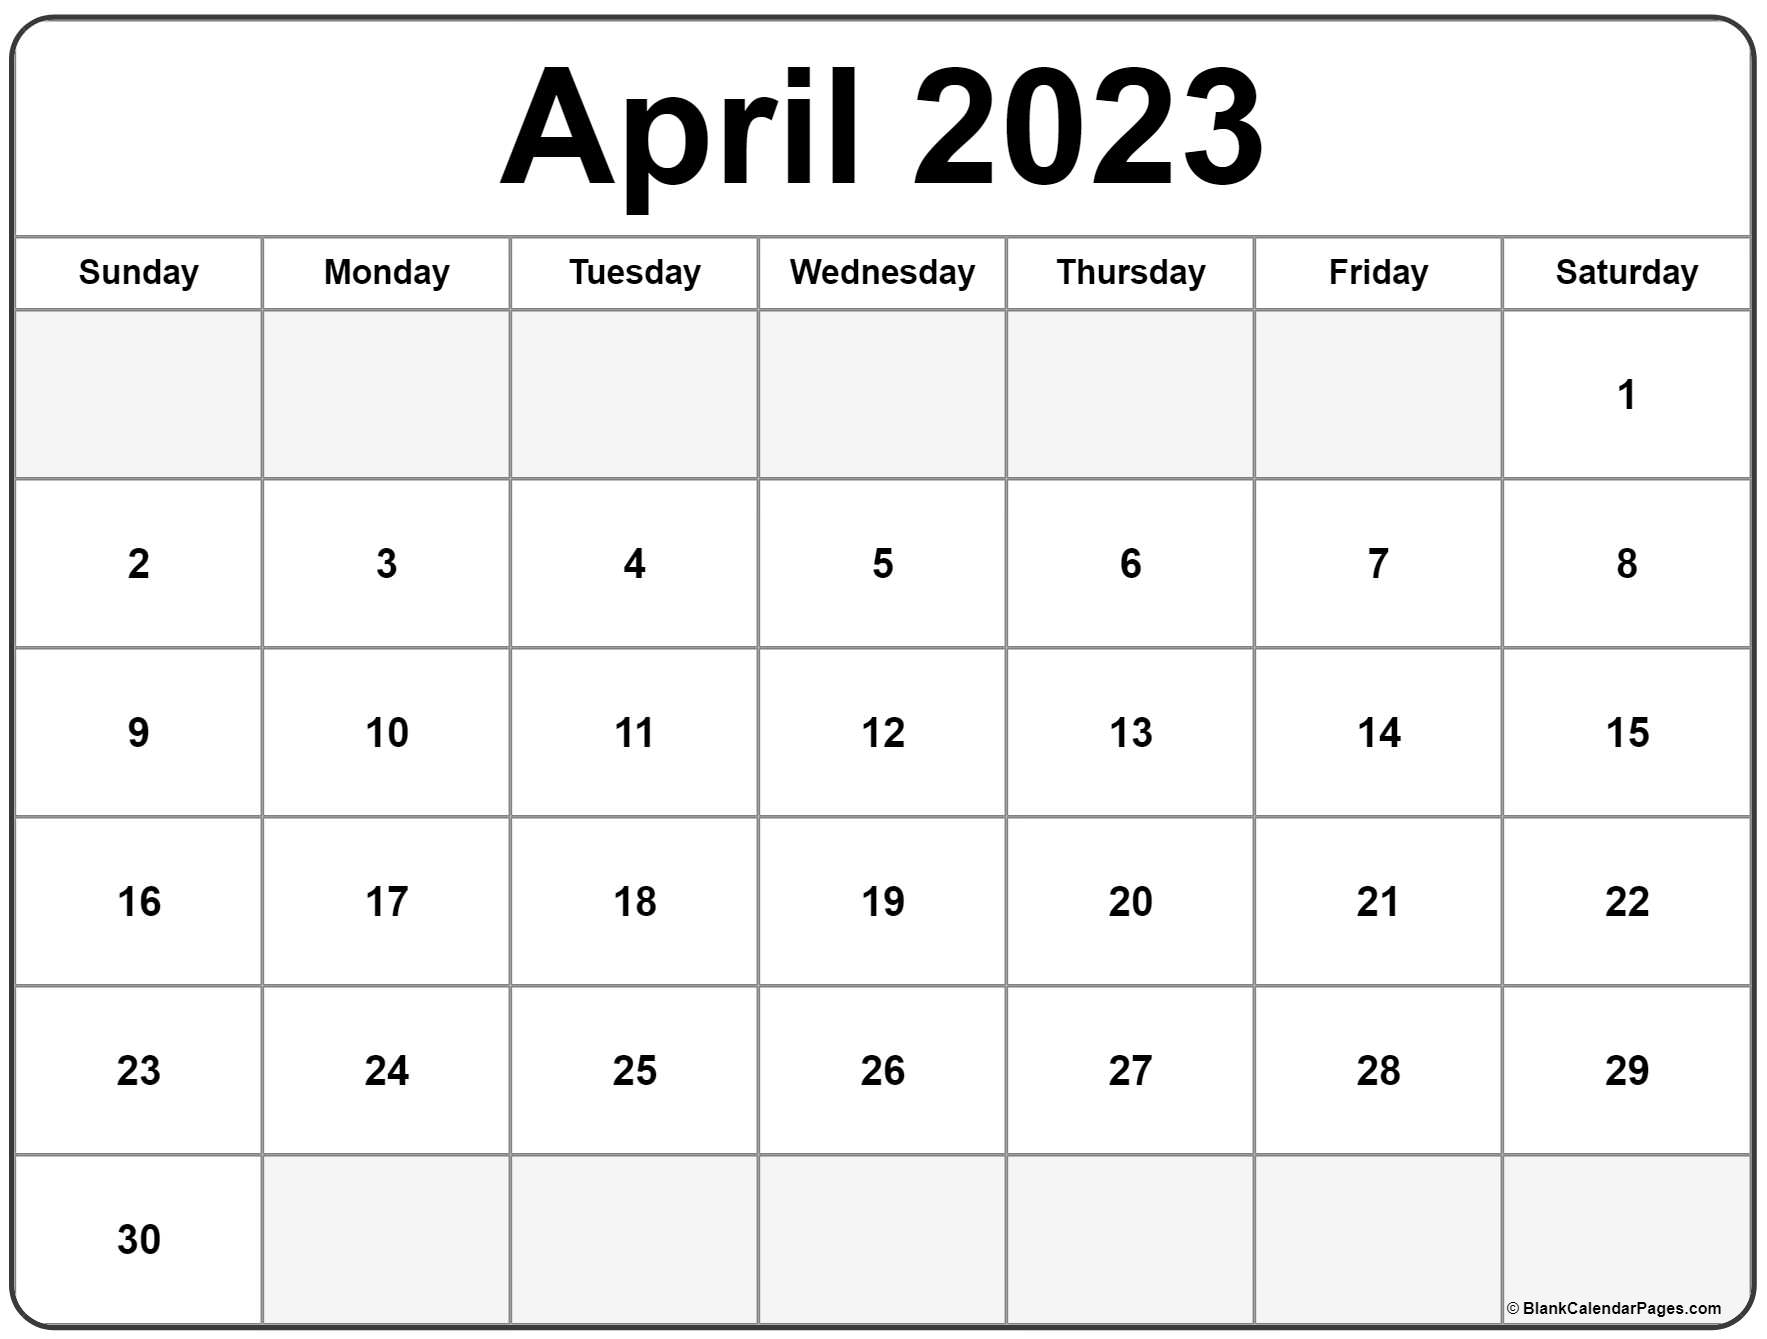 how many days until april 1st 2023